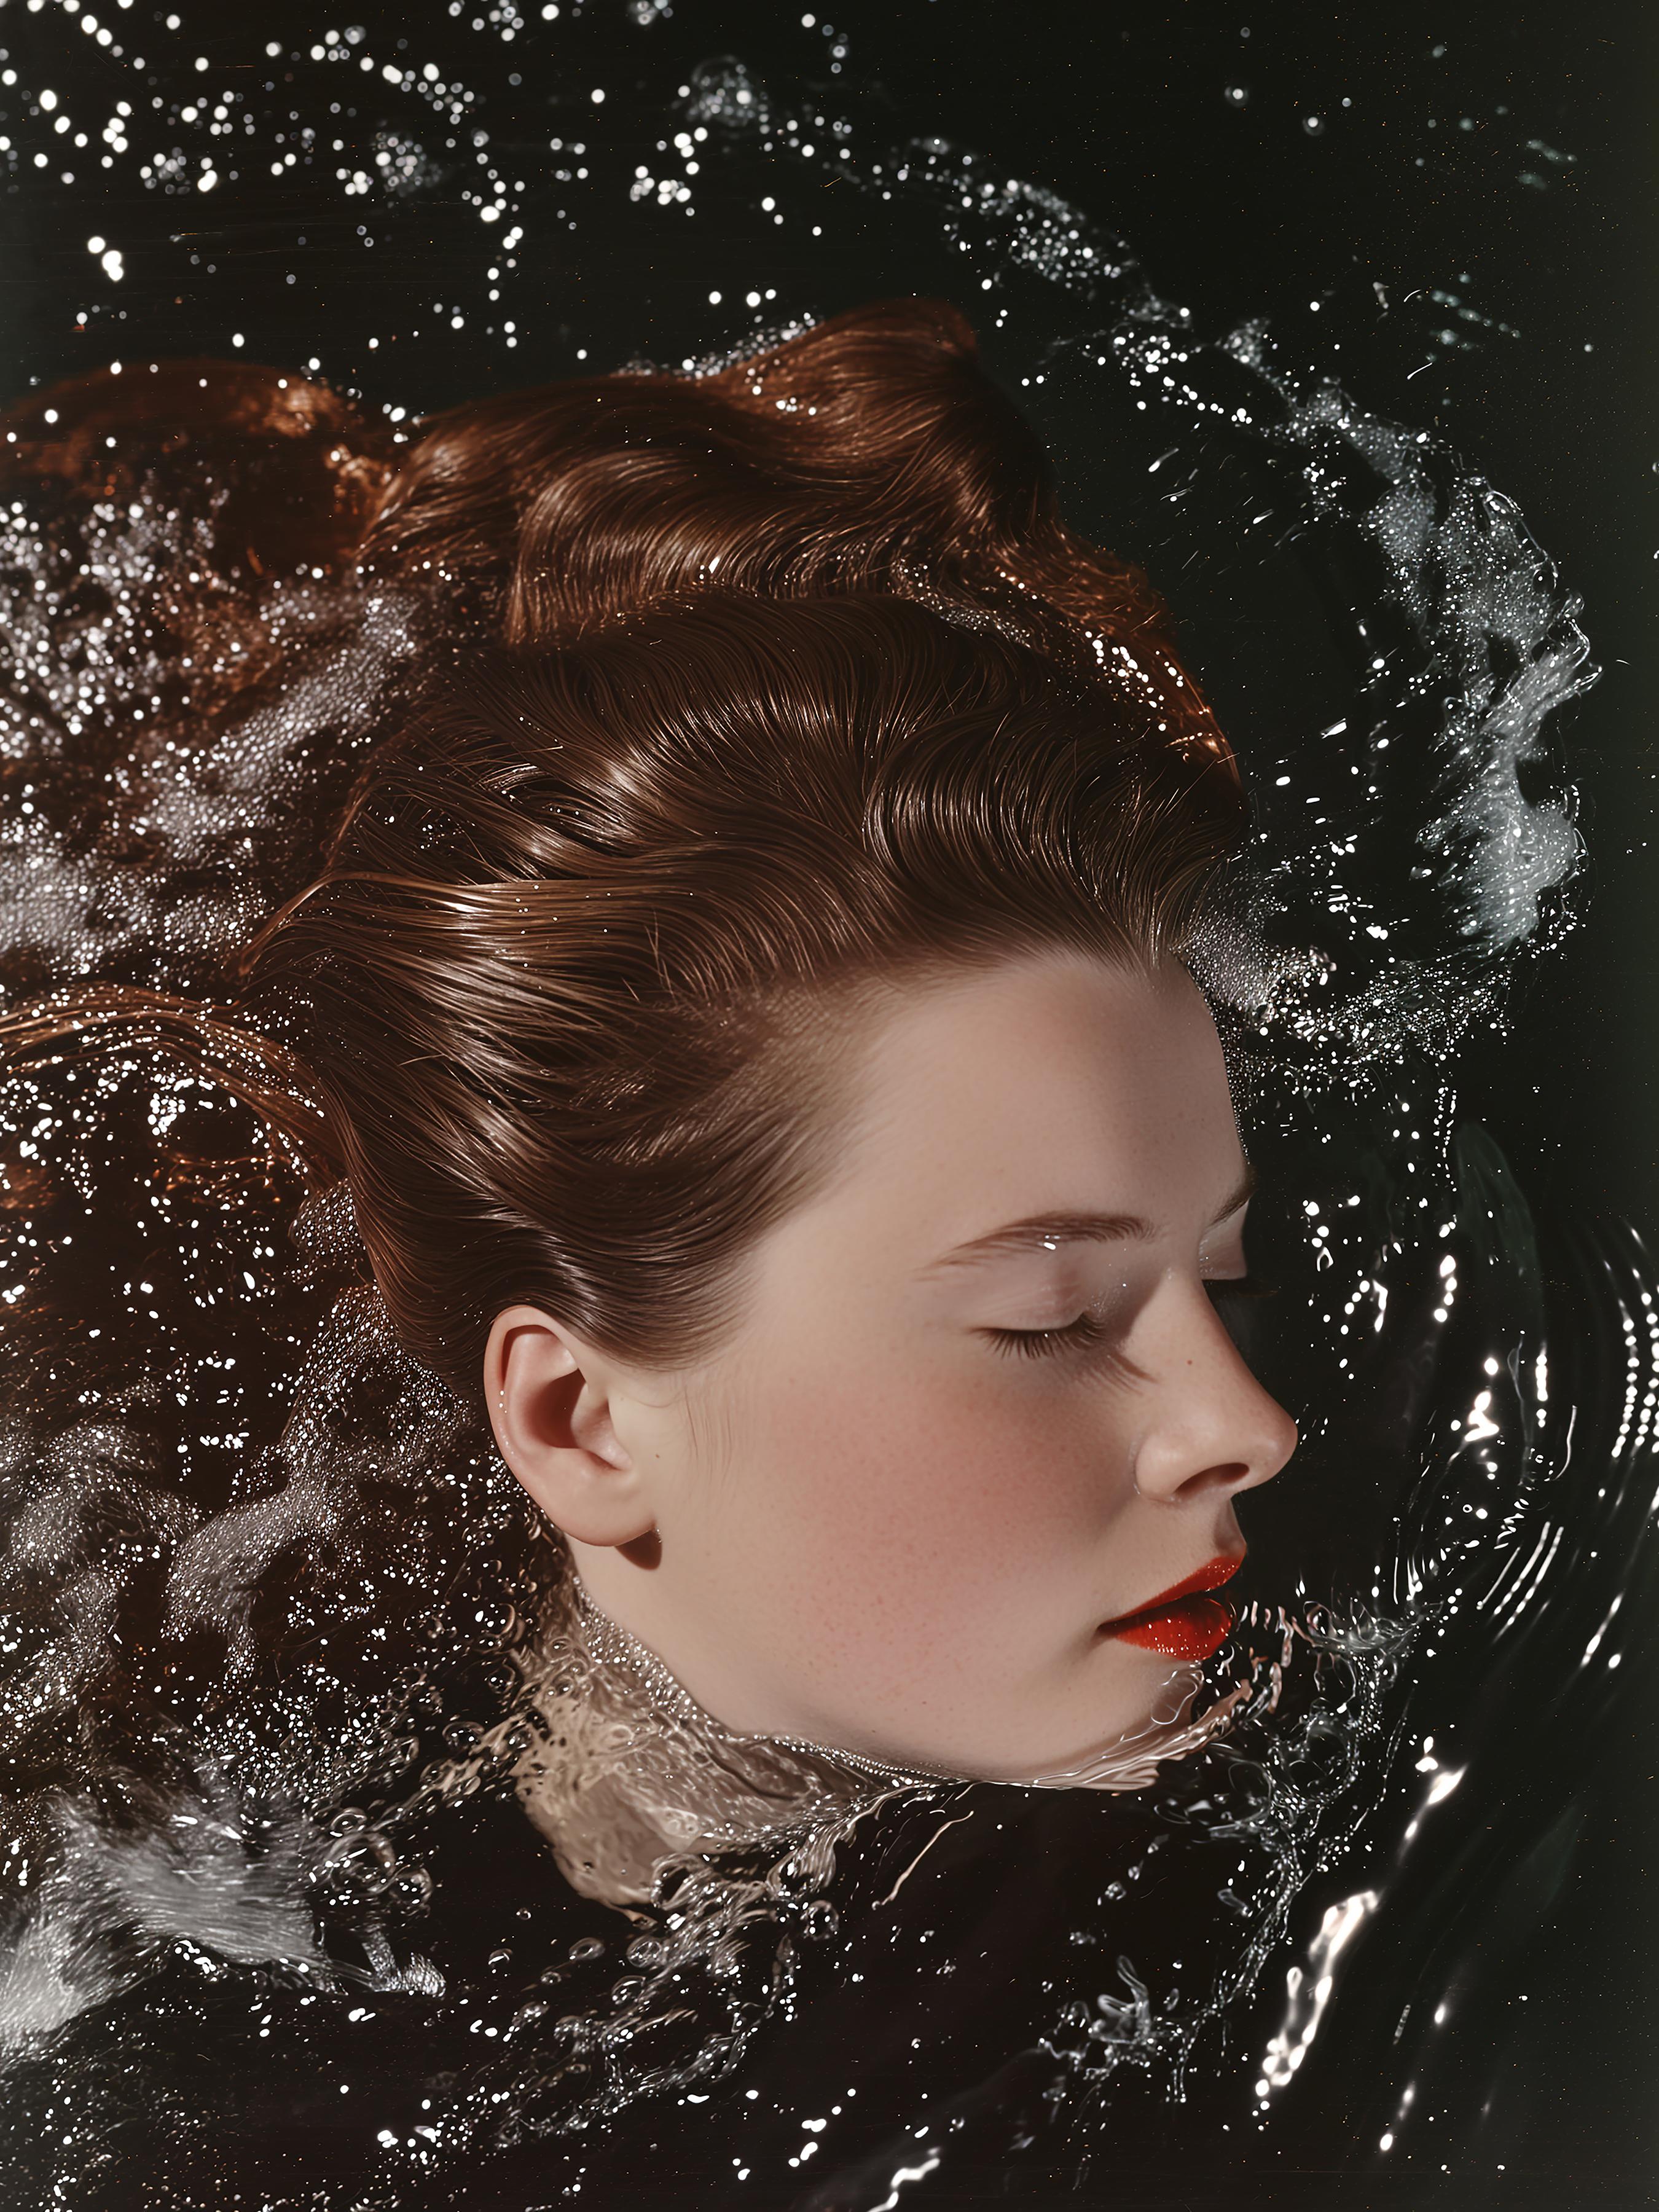 Charles Lutz Portrait Photograph – Bather 1 (The Modern Beauty Series) 